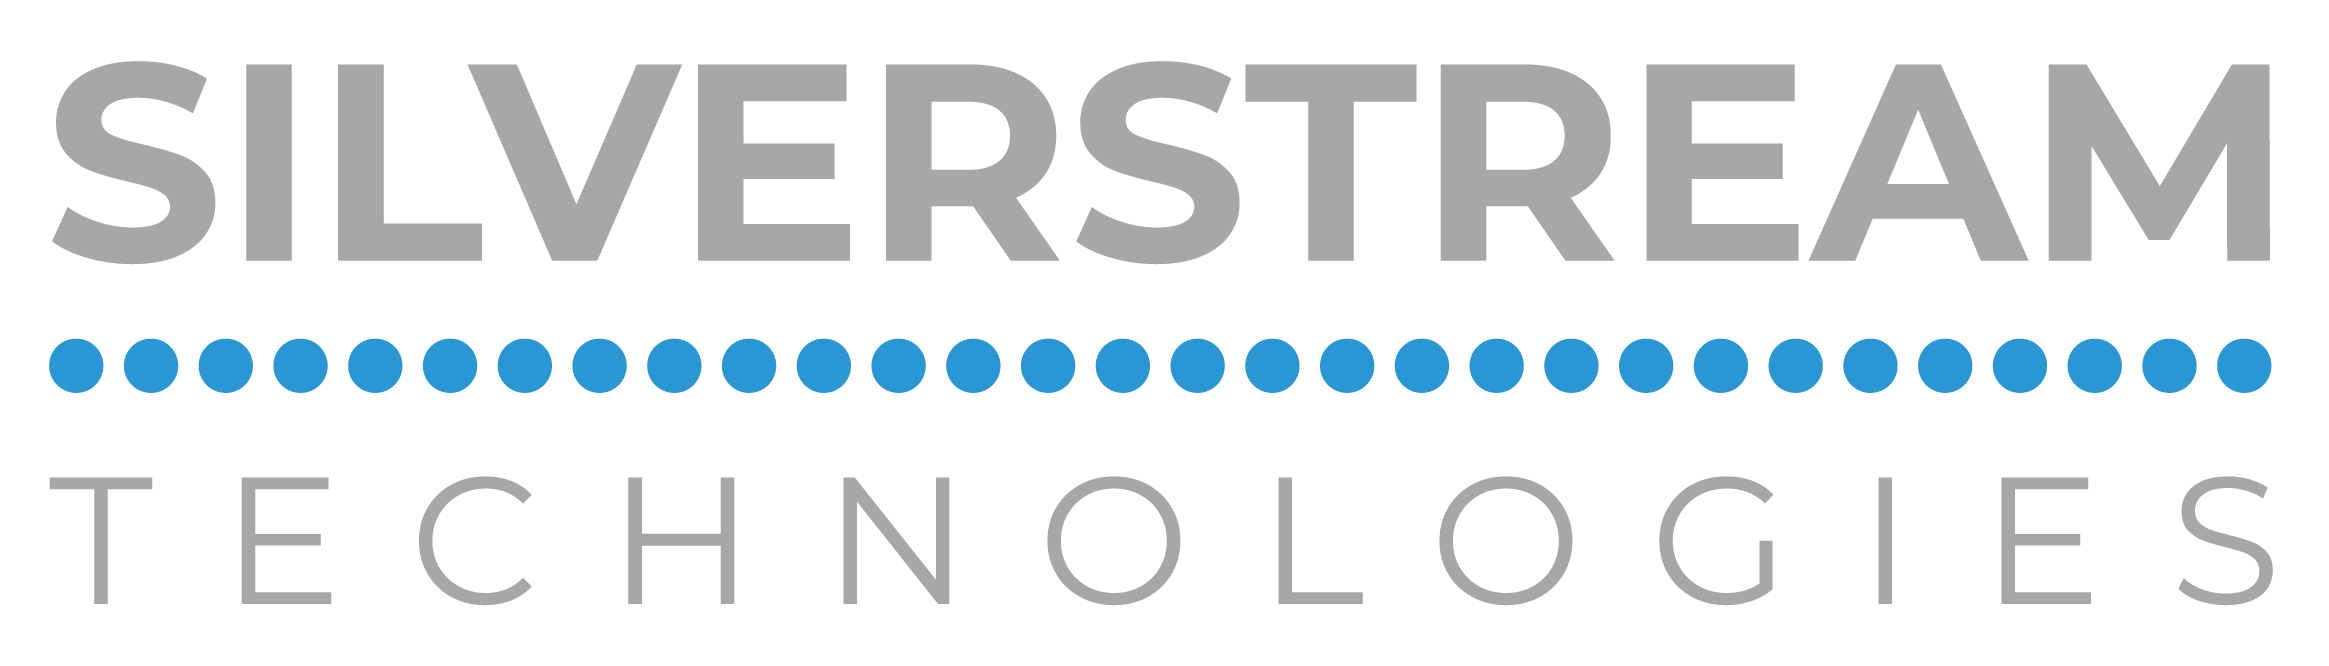 Silverstream Technologies logo